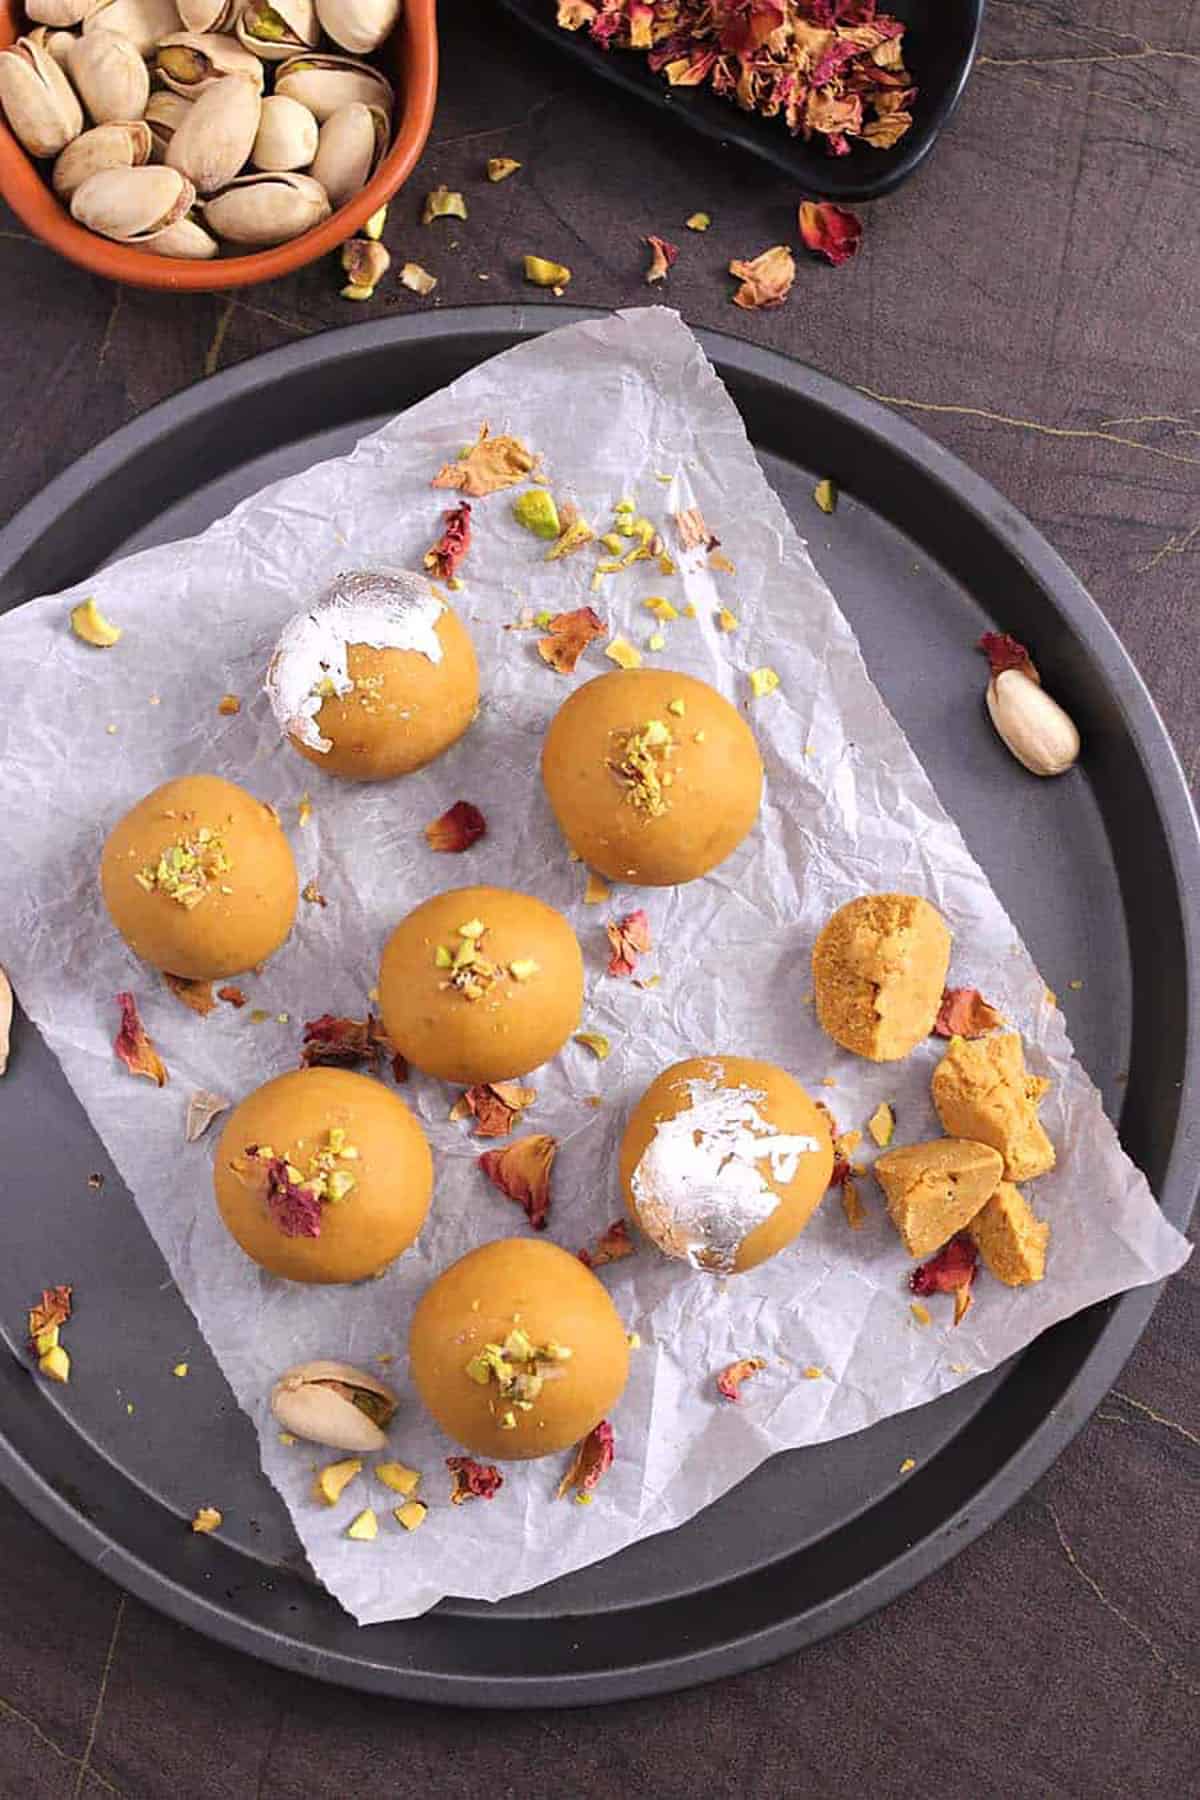 Besan ladoo recipe, besan ke laddu - traditional Indian sweet for Diwali, Navratri, Holi, etc. 